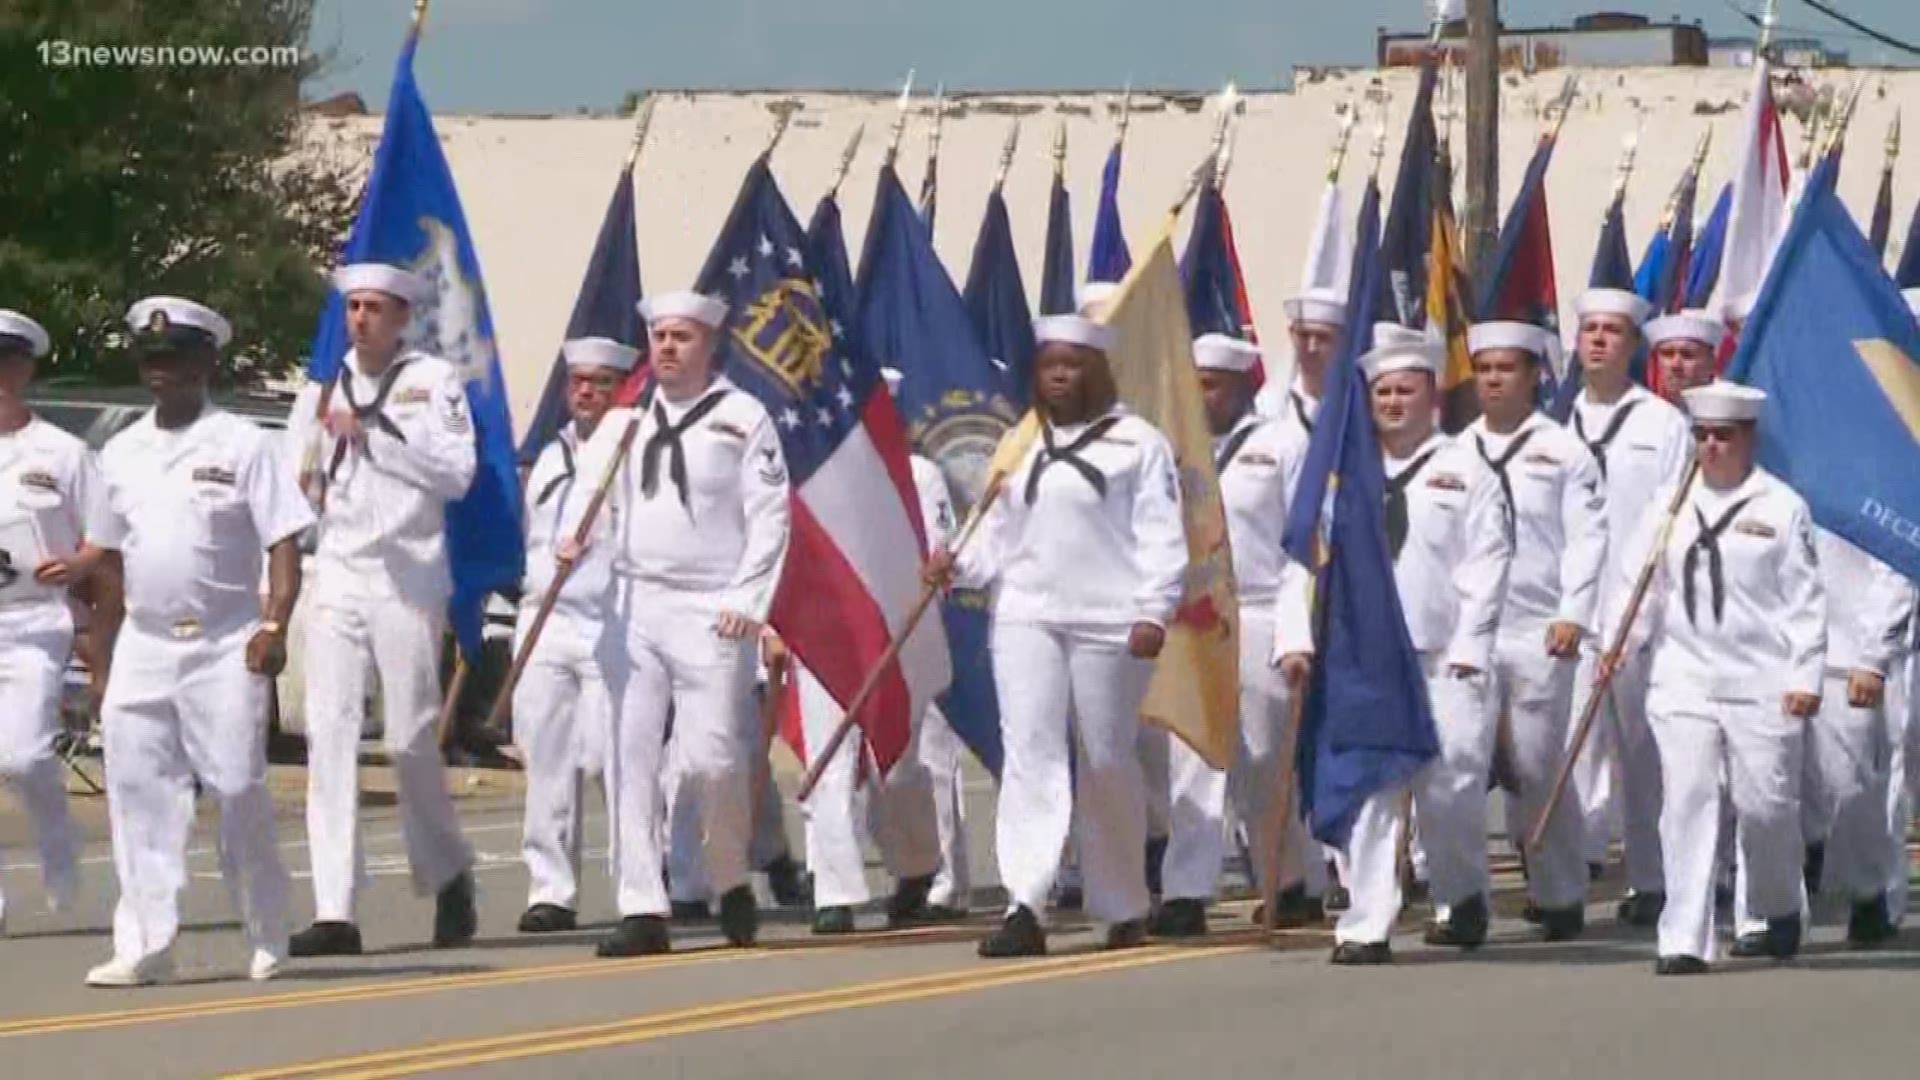 All across Hampton Roads people were celebrating Memorial Day and remembering fallen service members.